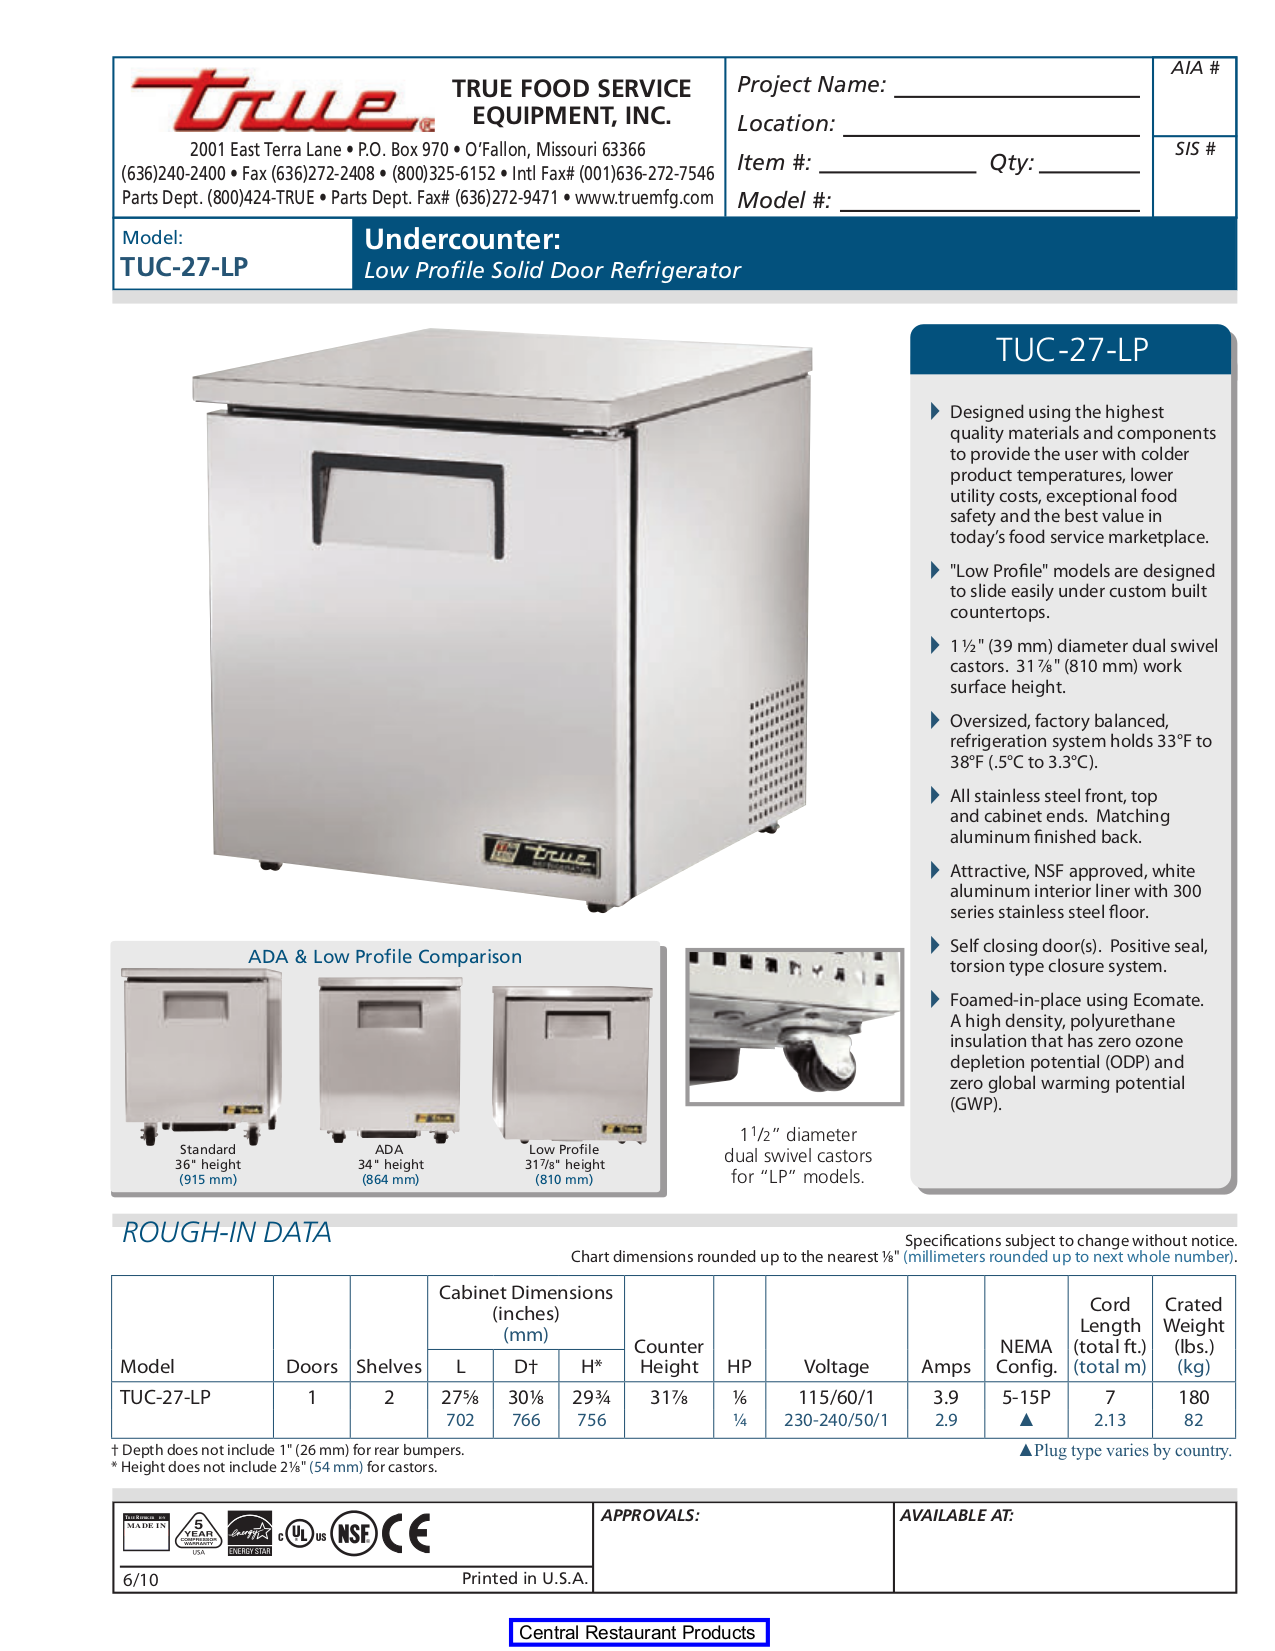 pdf for True Refrigerator TUC-27 manual